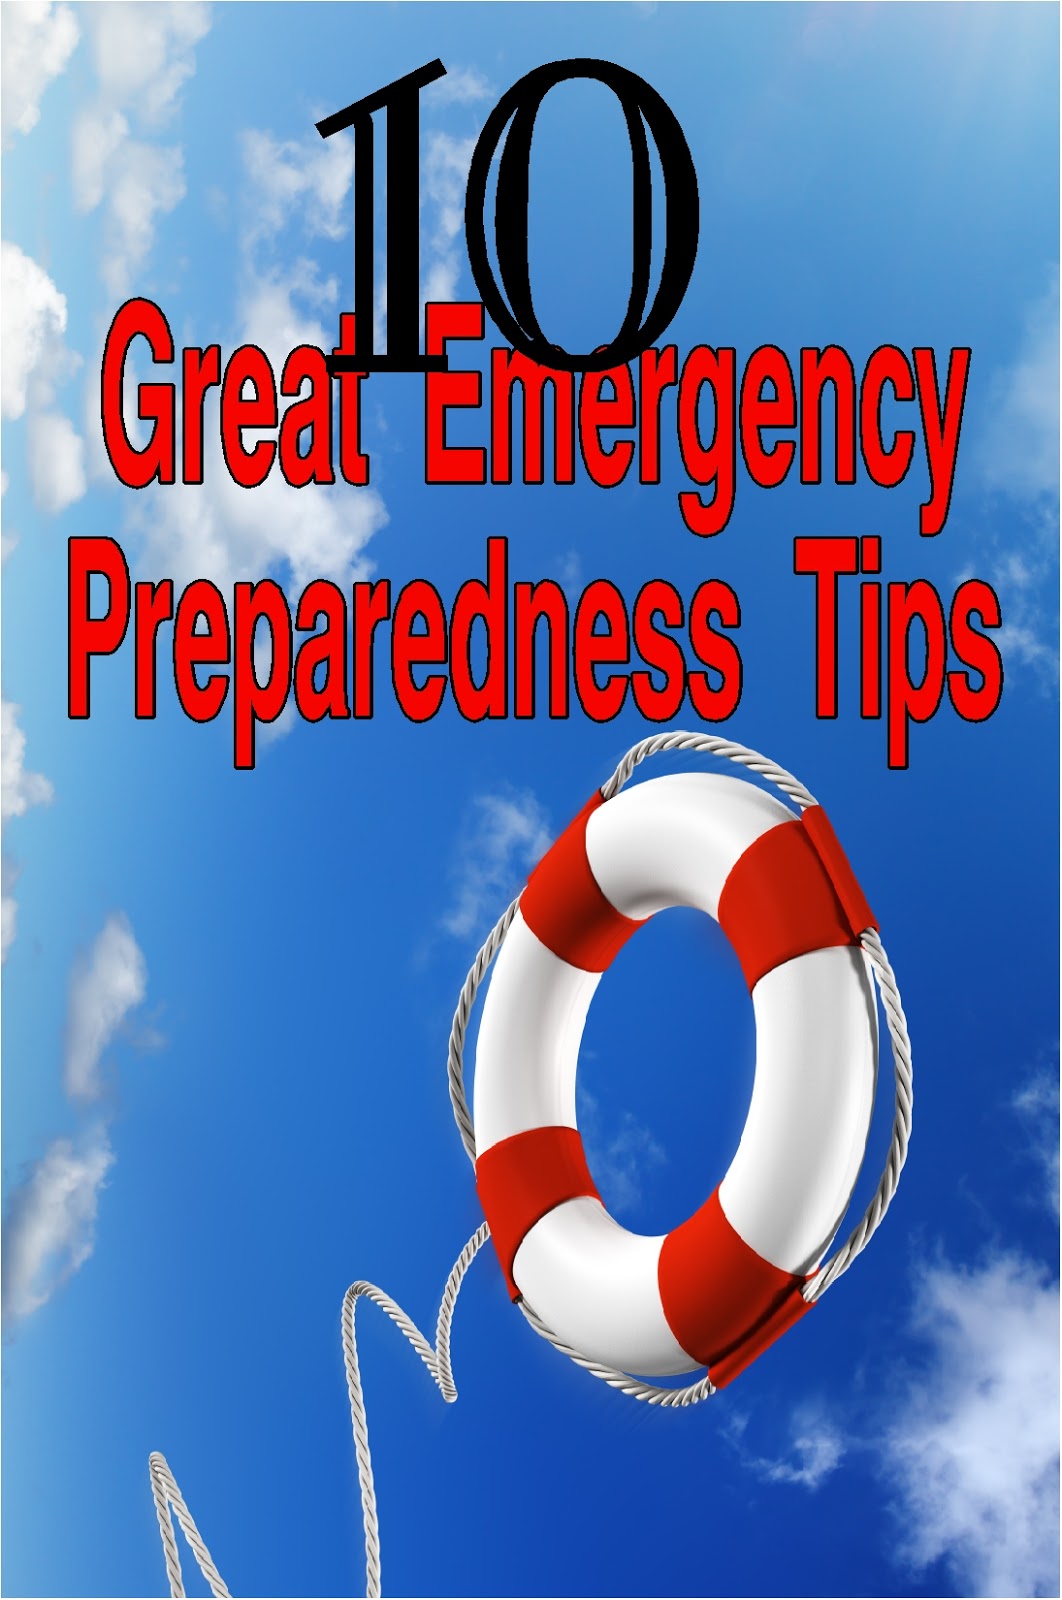 10 Great Emergency Preparedness Tips